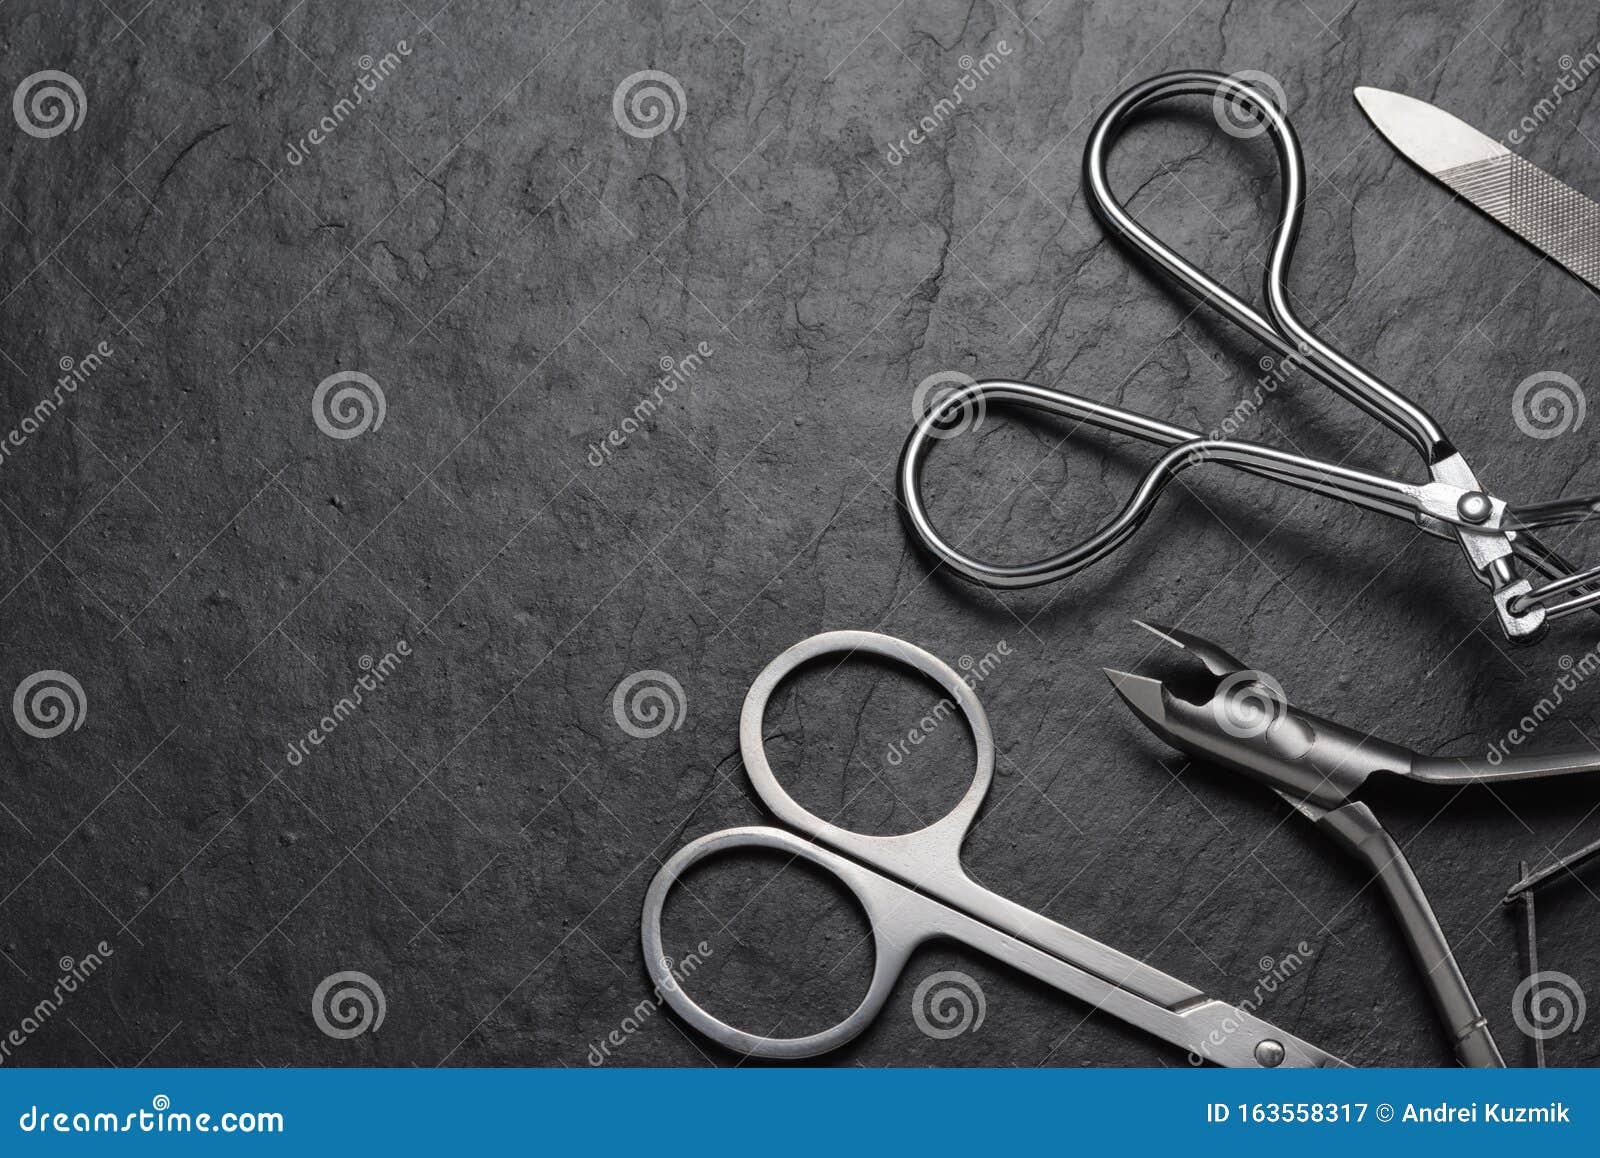 Manicure and Pedicure Tools Set on Black Background Stock Image - Image ...